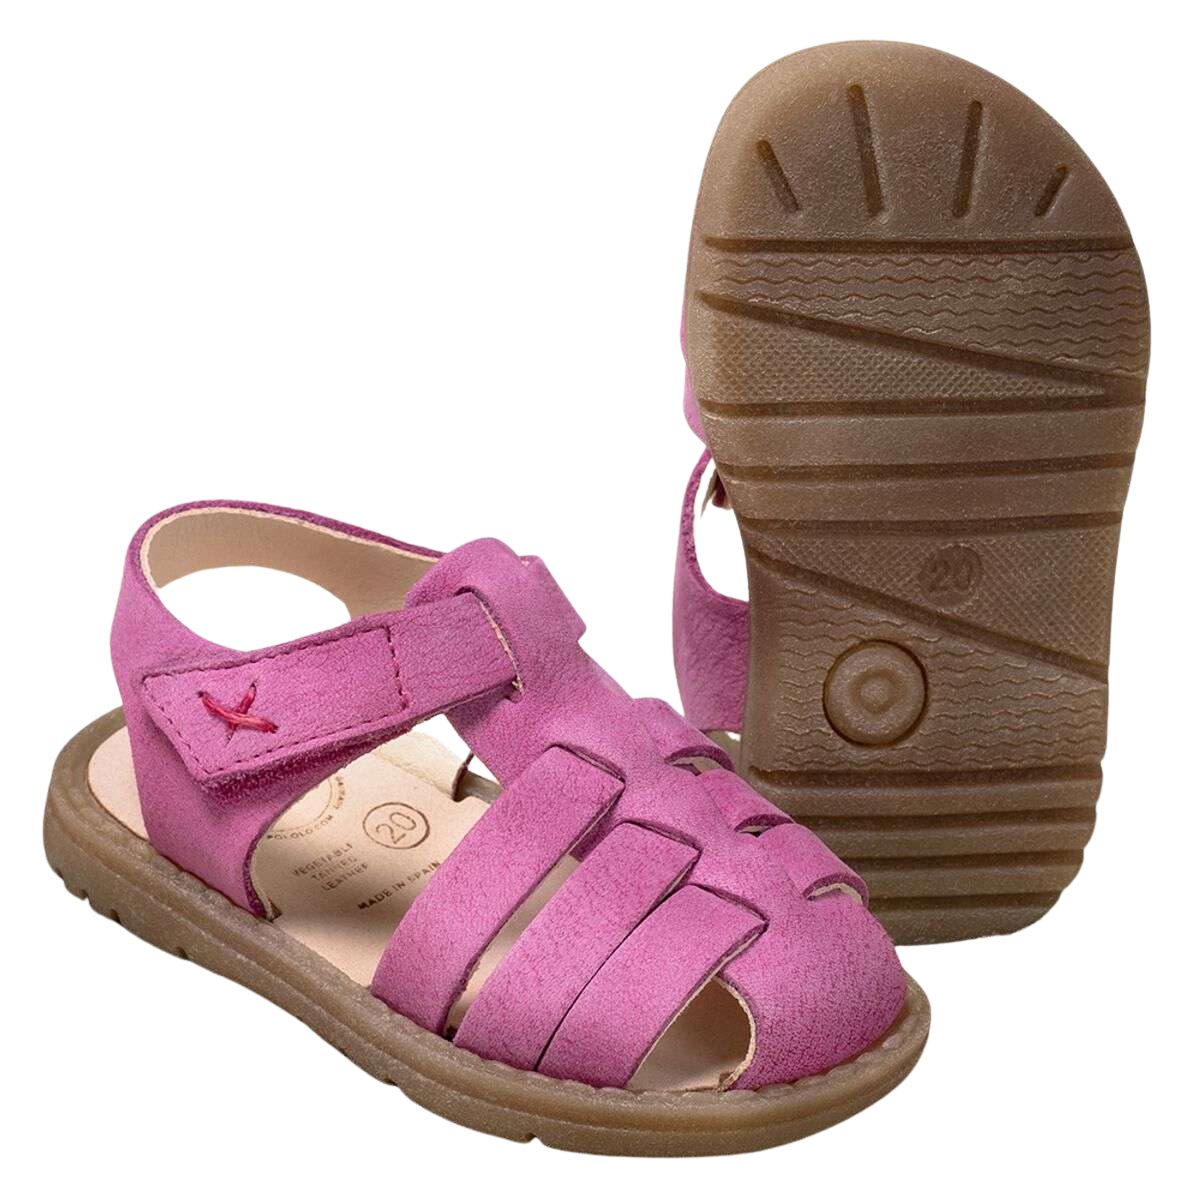 POLOLO Kinderscchuhe Fiesta, Unisex Kinder Sandale Allergikerfreundliche Kinderschuhe Pink